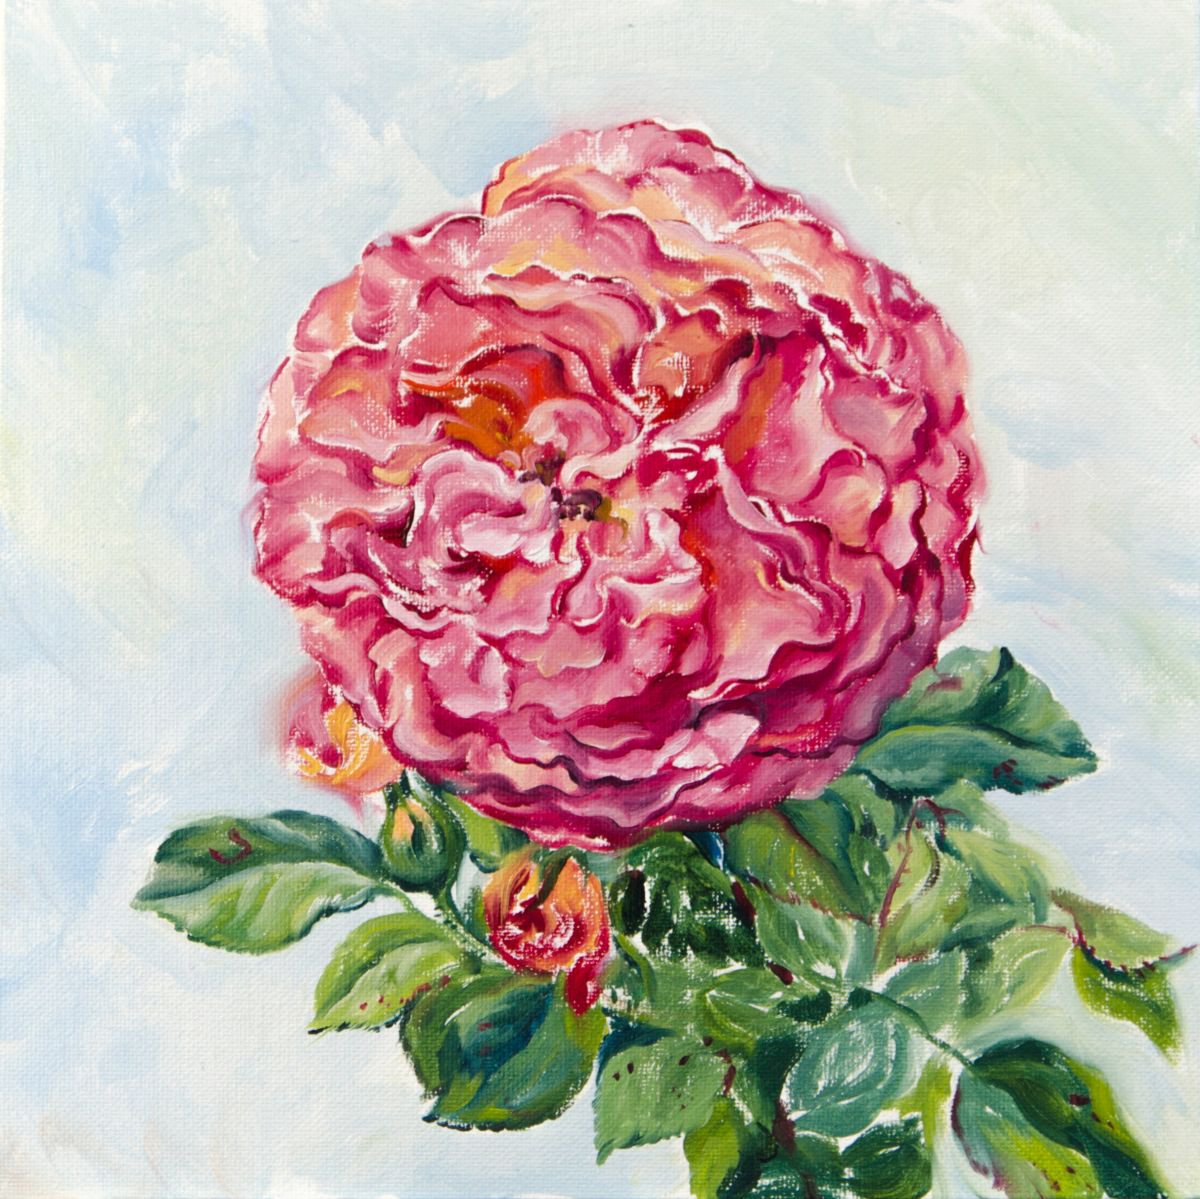 The giant rose by Daria Galinski